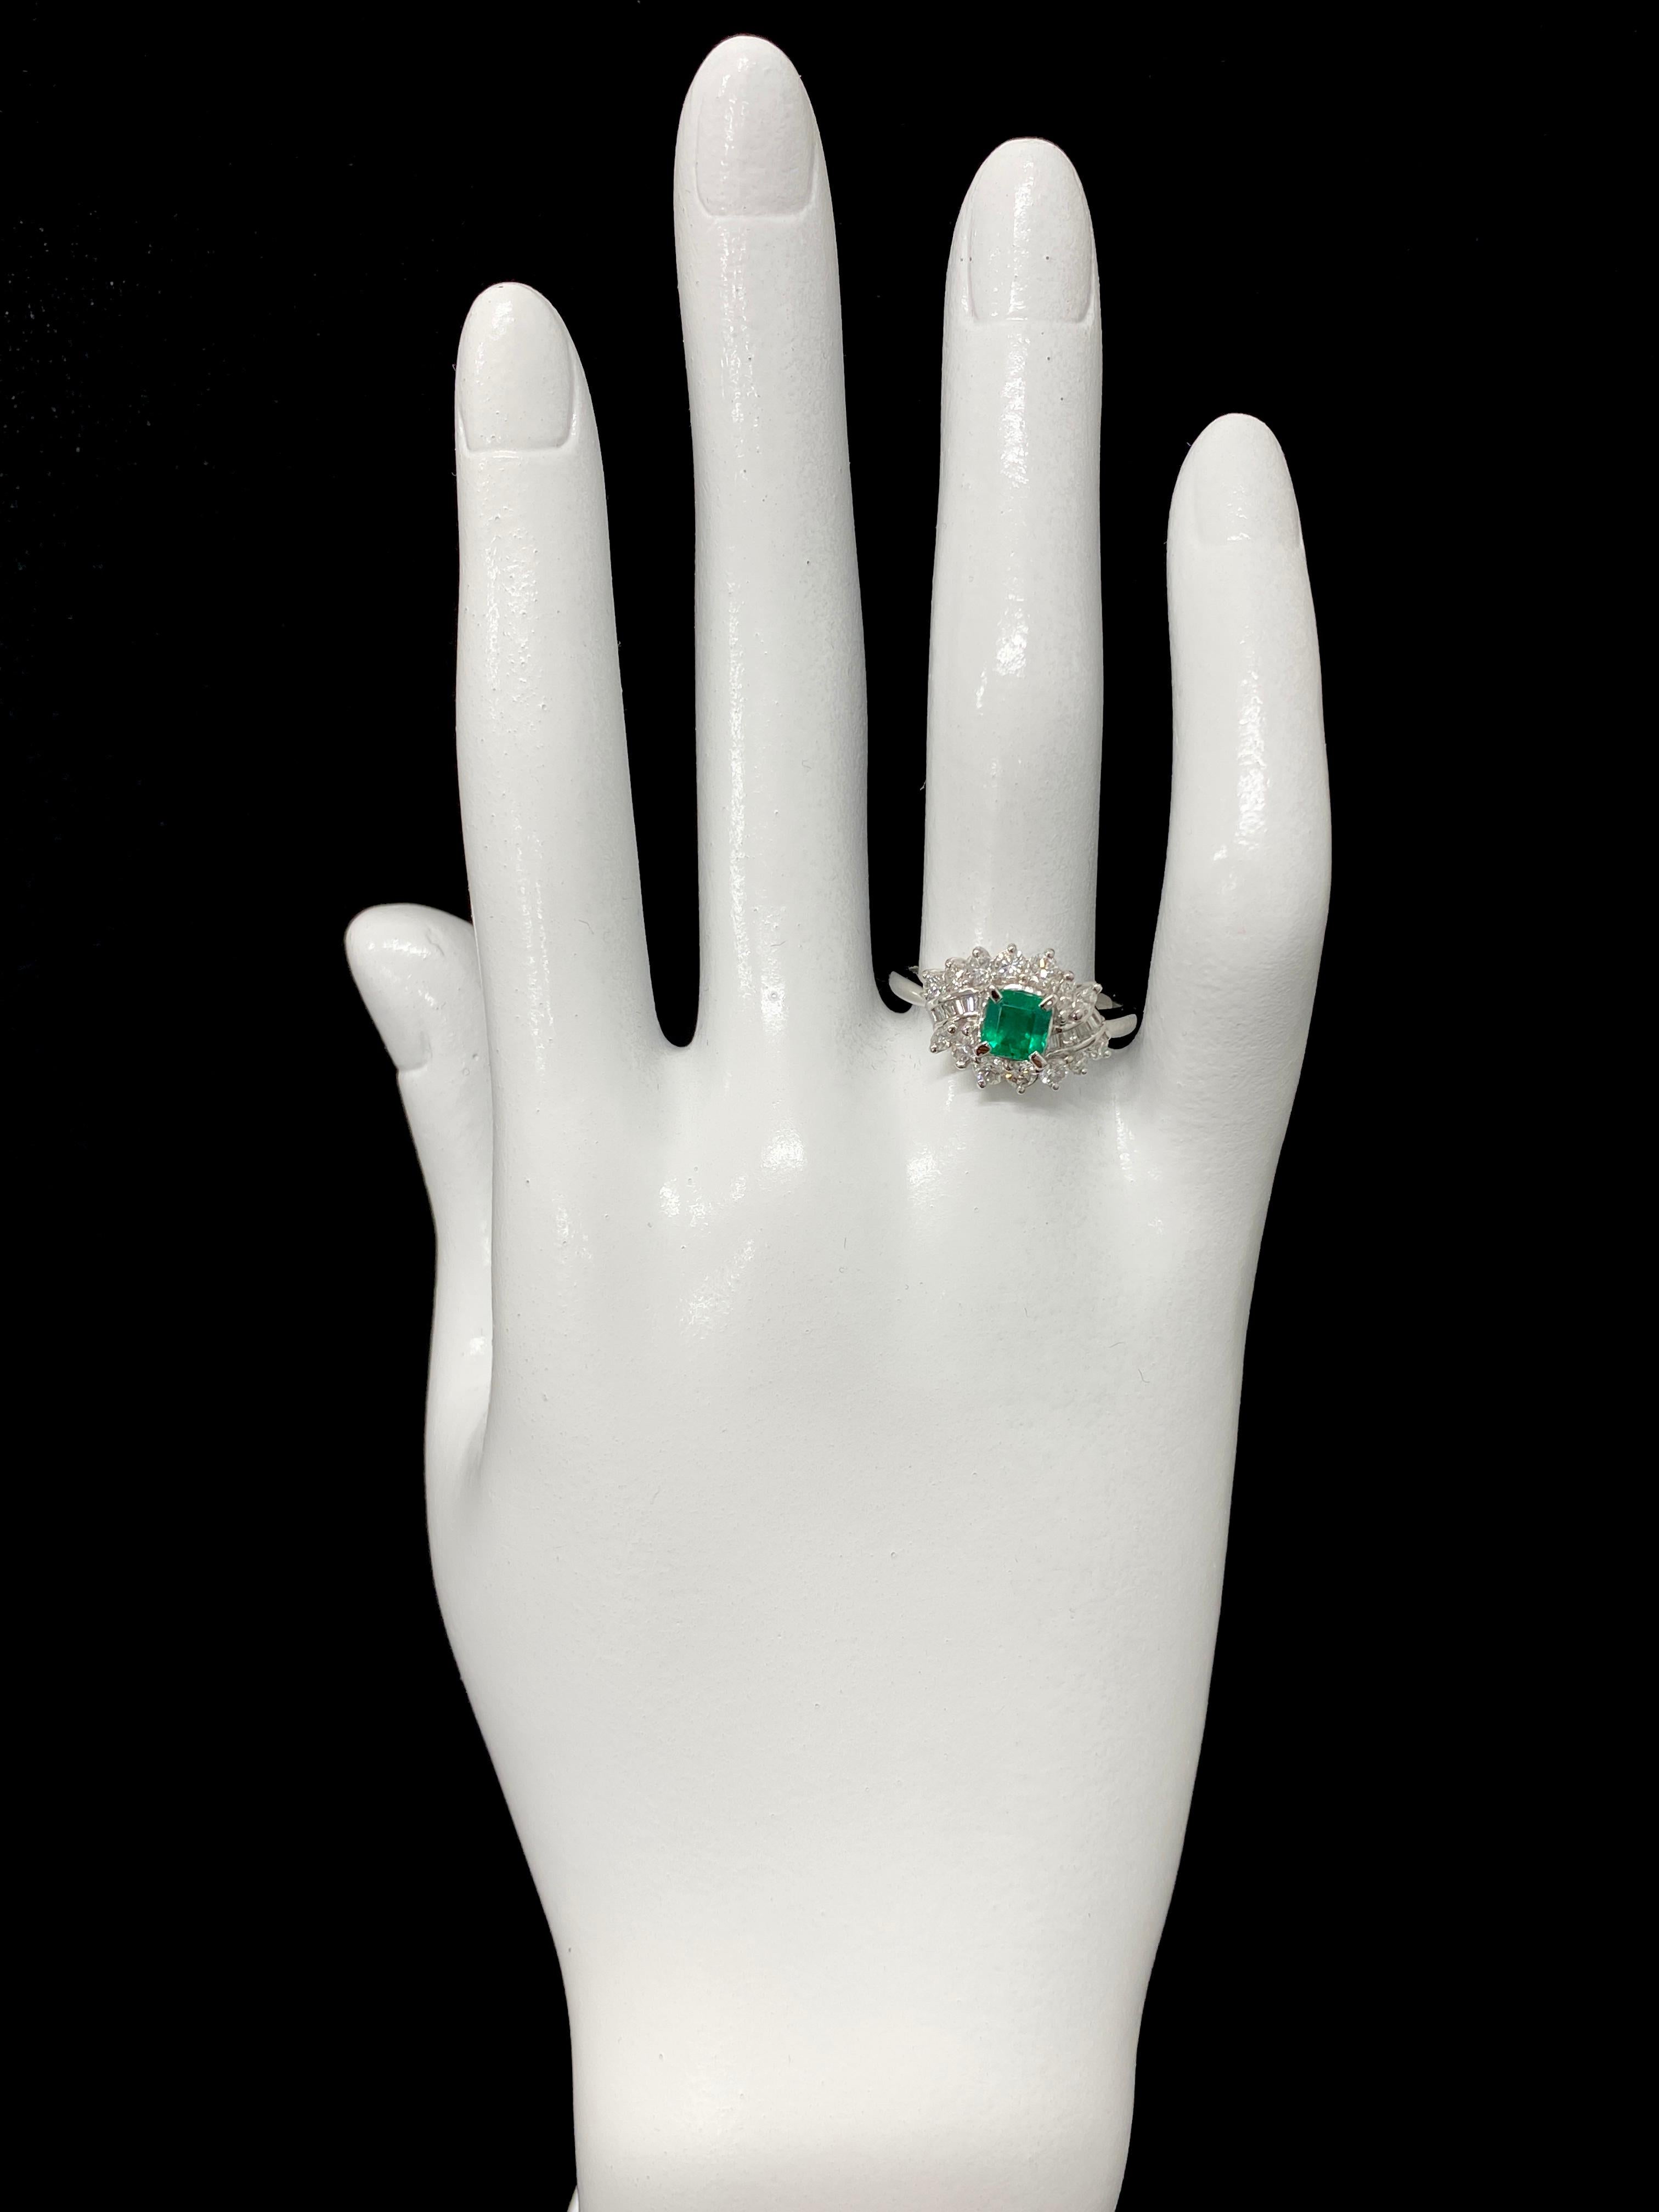 Modern 0.62 Carat Natural Emerald and Diamond Ring Set in Platinum